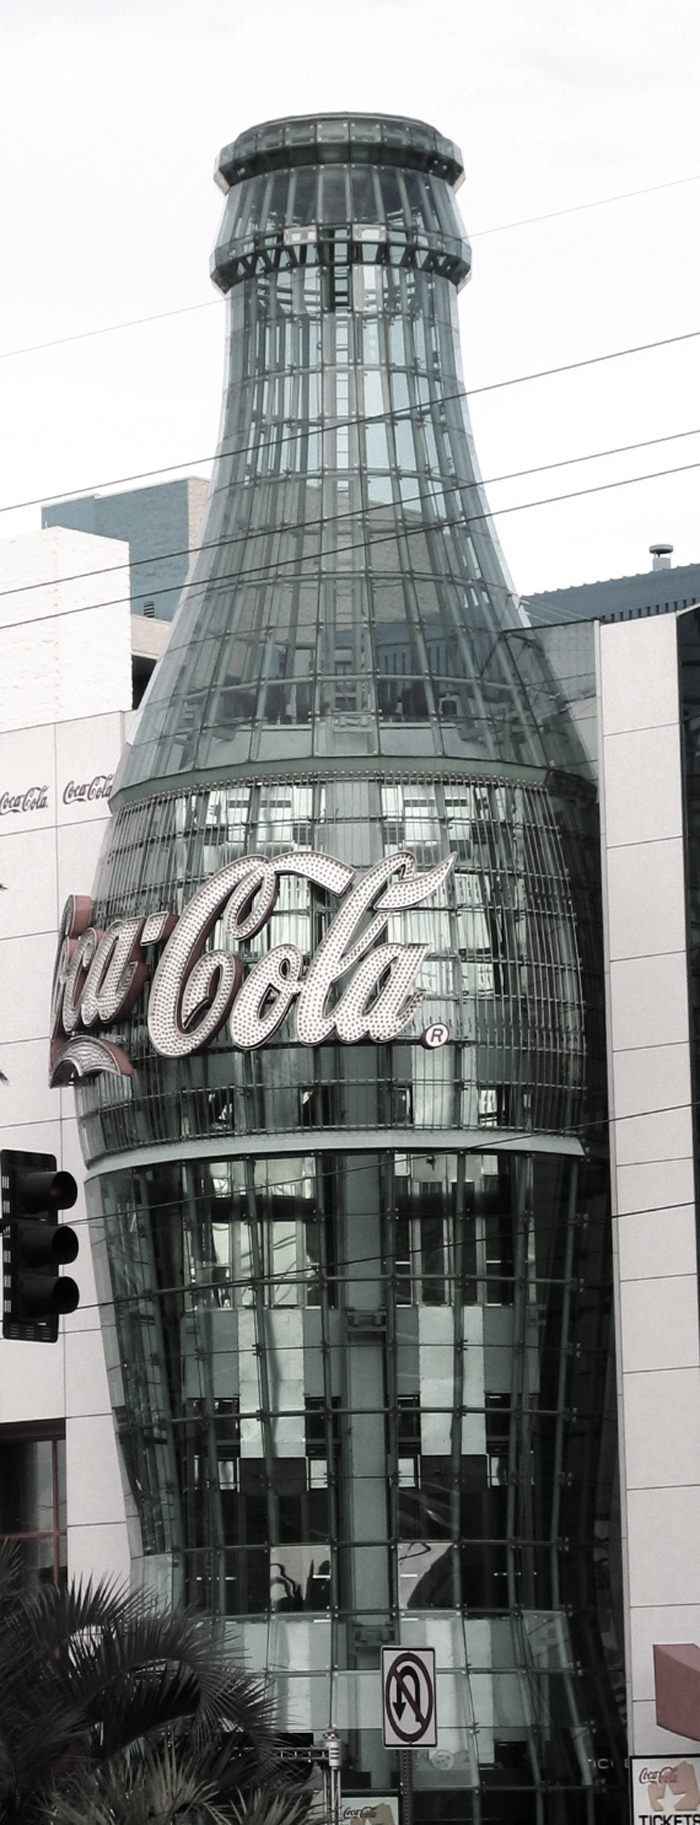 The-World-of-Coca-Cola,-Pemberton-Place,-Atlanta,-USA